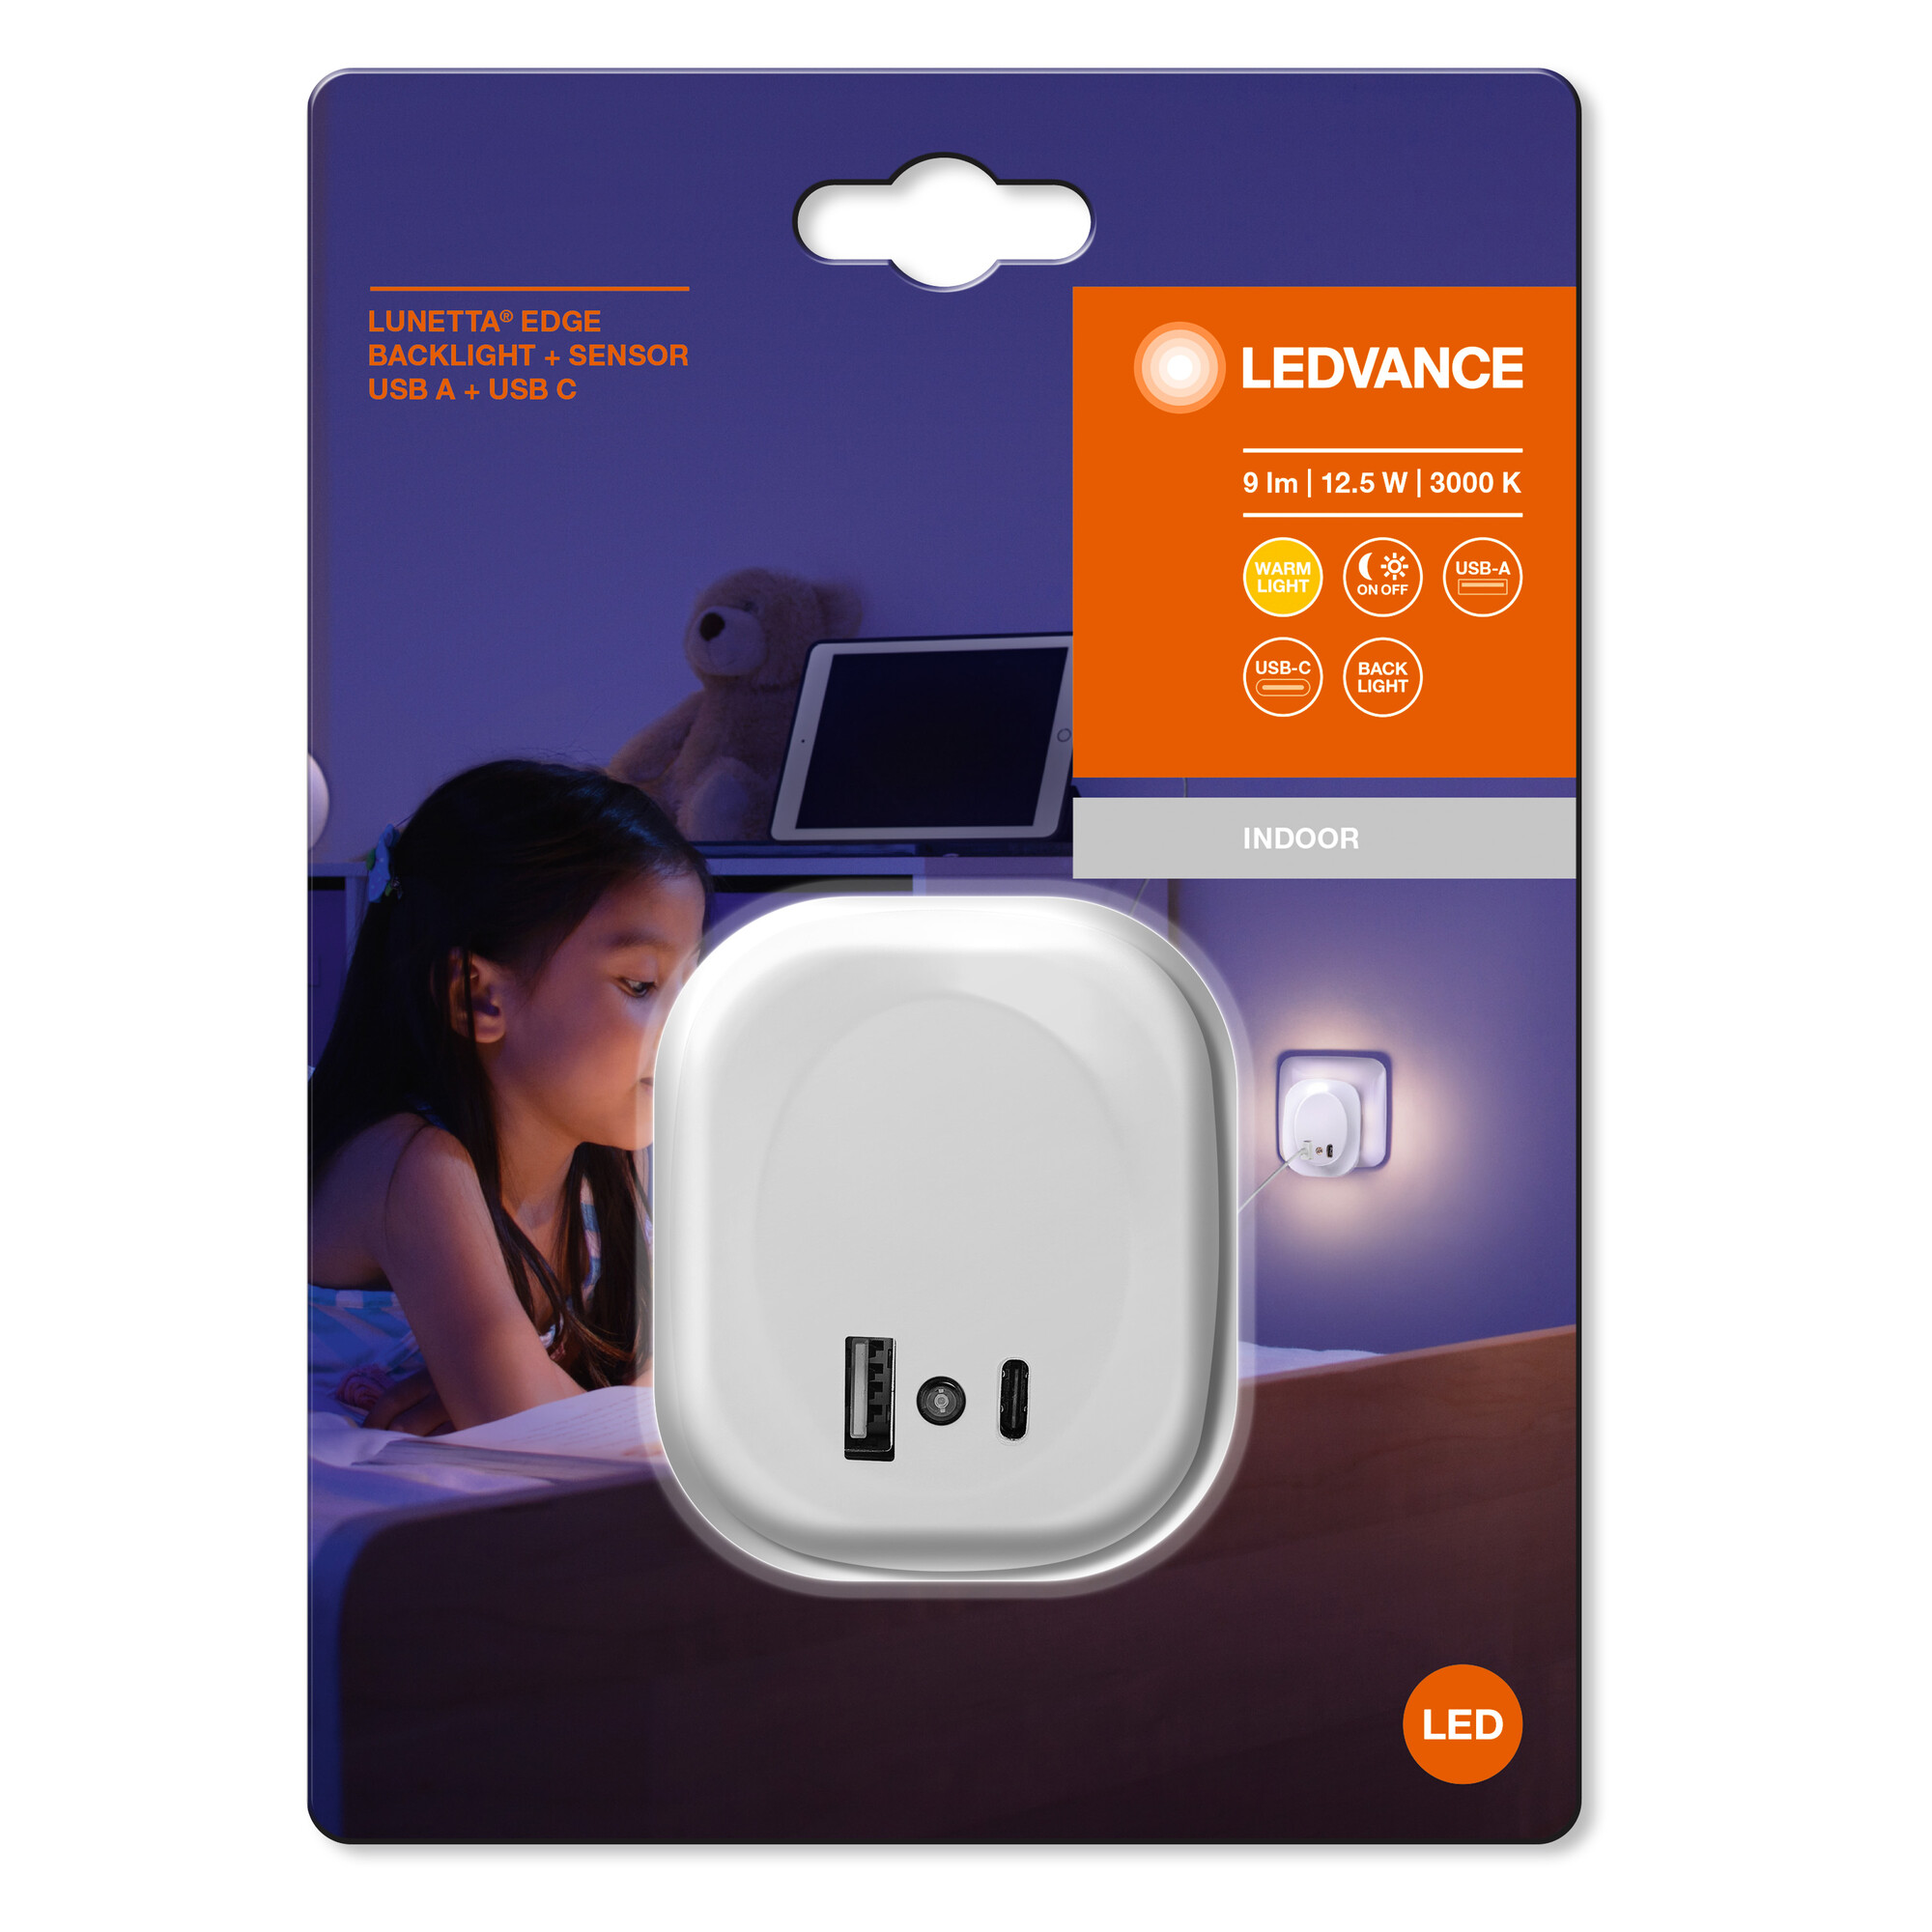 LED-Nachtlicht 'Lunetta Edge' weiß USB A/C 58 x 60 x 70 mm + product picture